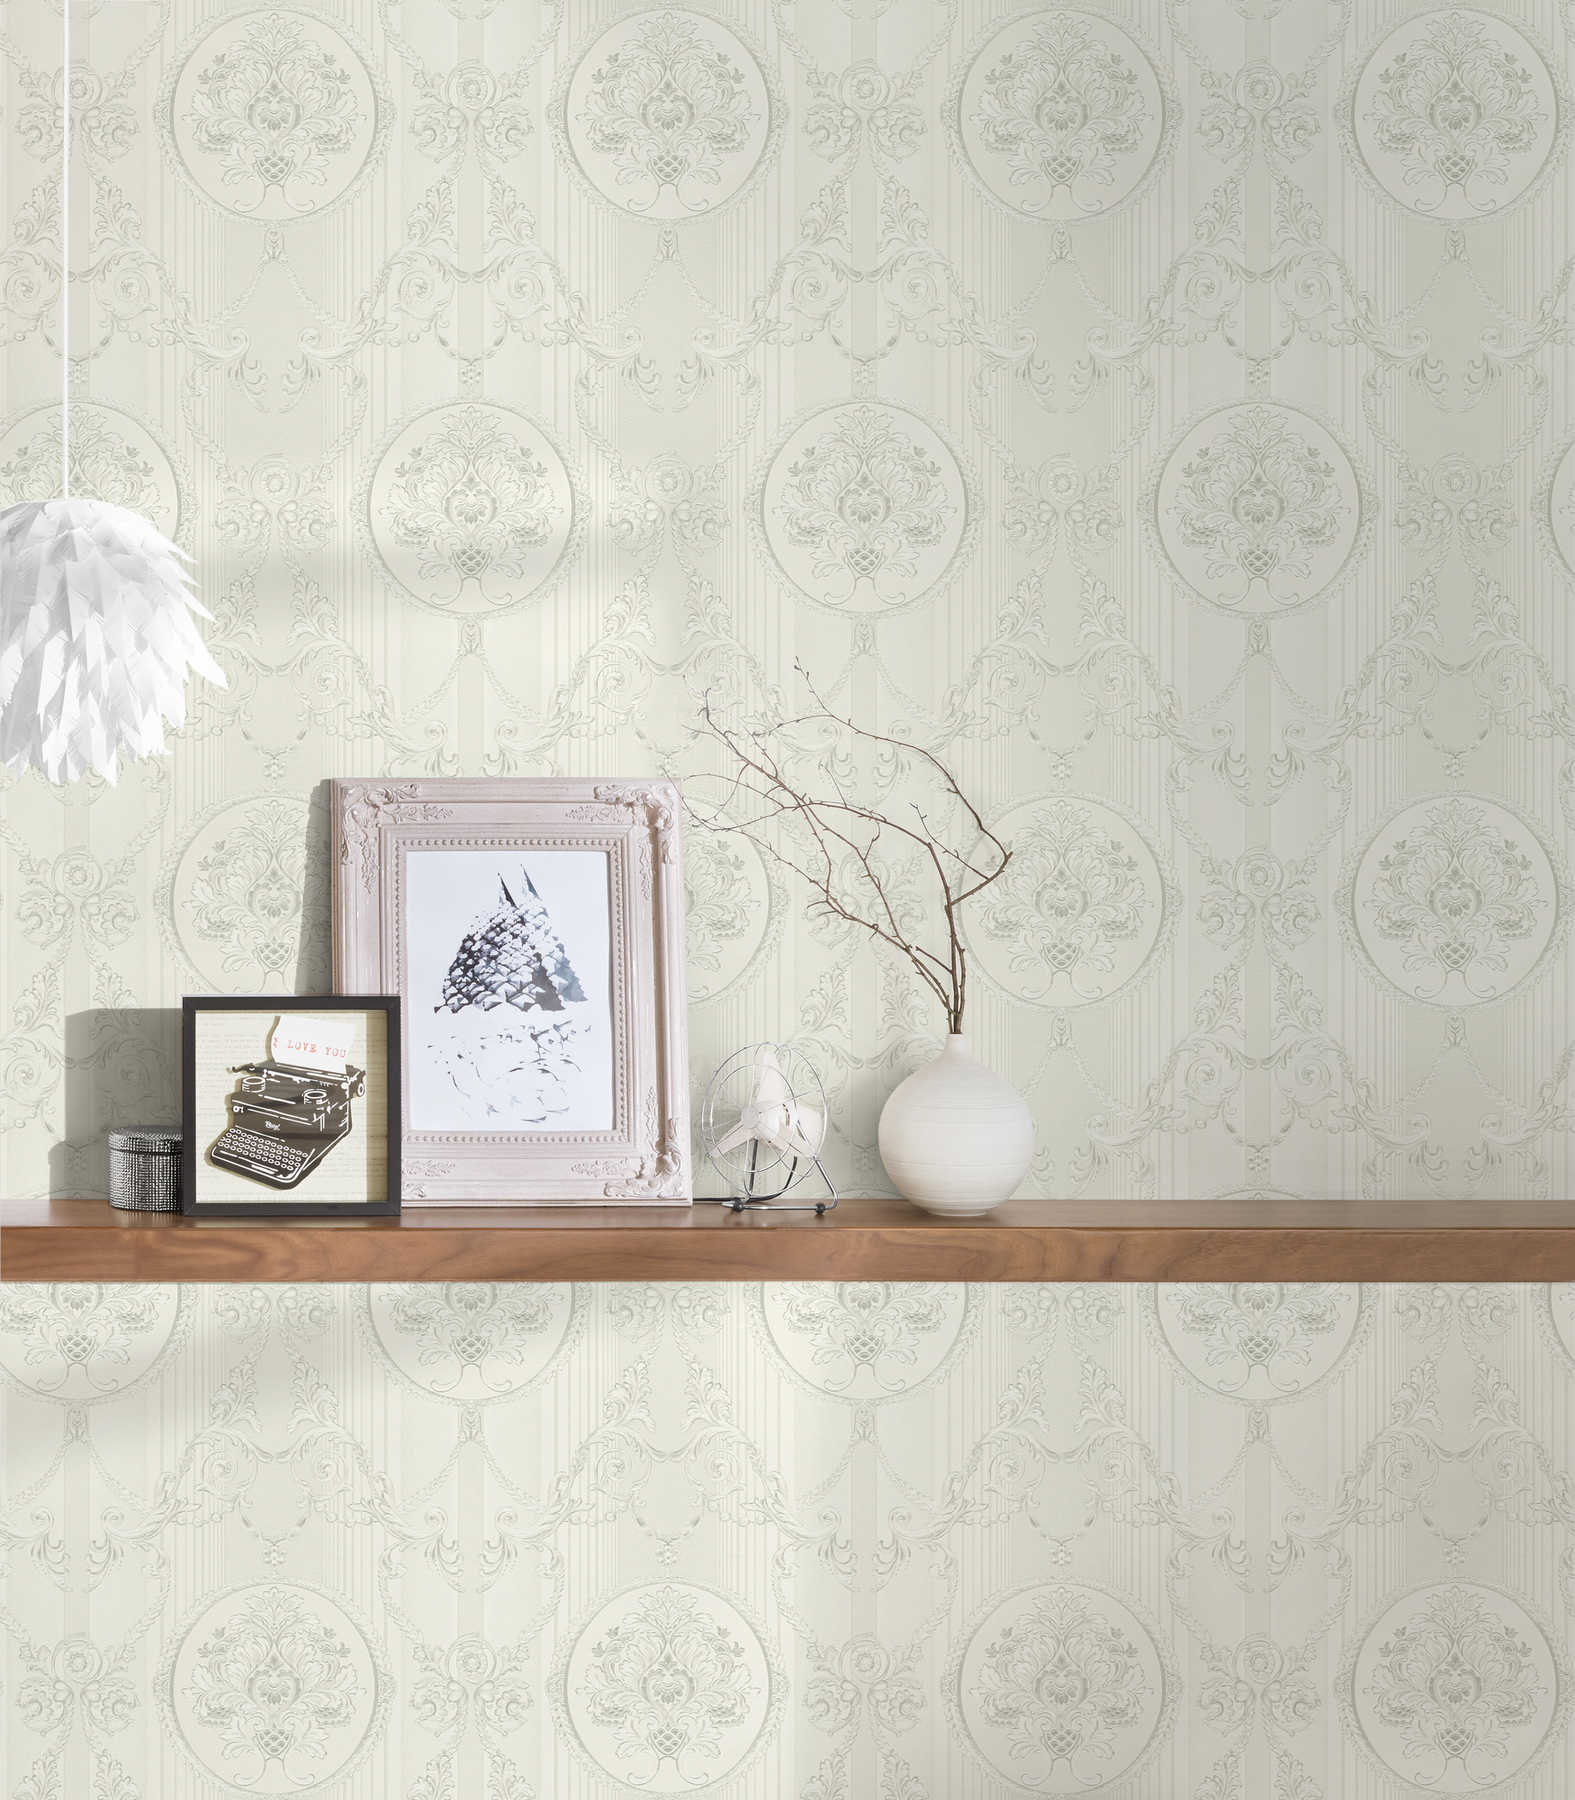             Neobarock Tapete mit Ornament Design & Metallic-Effekt – Metallic, Weiß
        